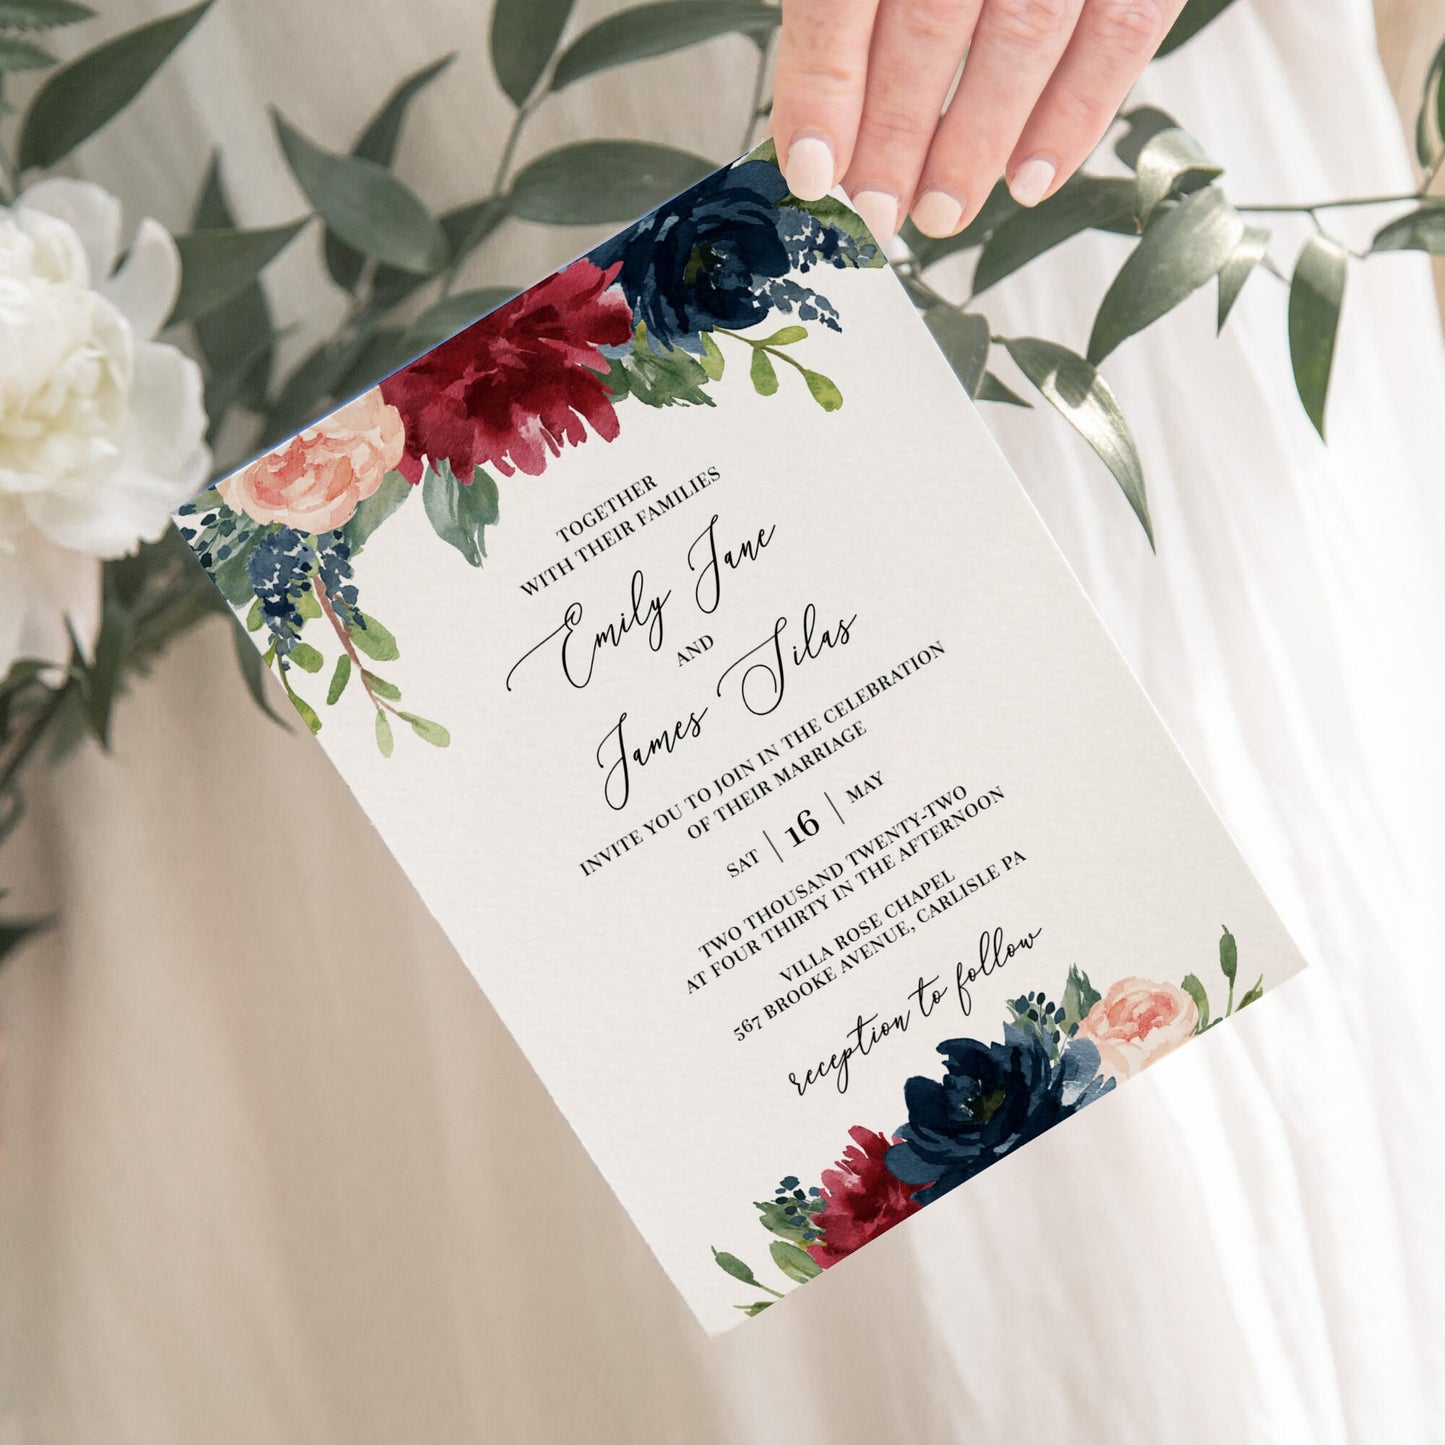 Editable Wedding Invitation Floral Fall Wedding Invite Burgundy Navy Floral Template